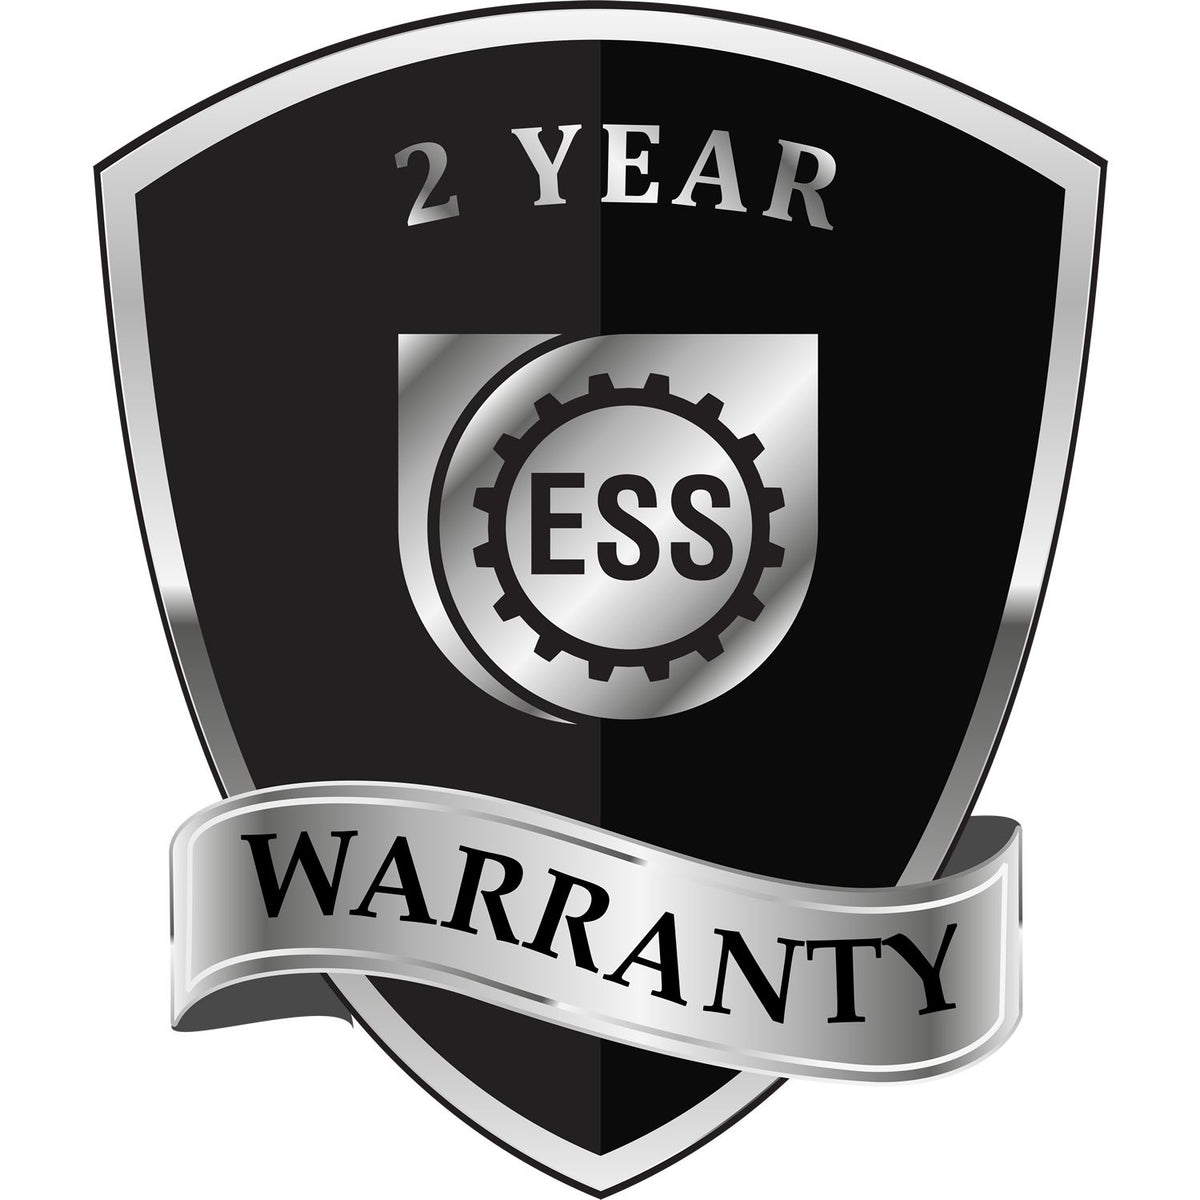 A black and silver badge or emblem showing warranty information for the Gift Rhode Island Land Surveyor Seal